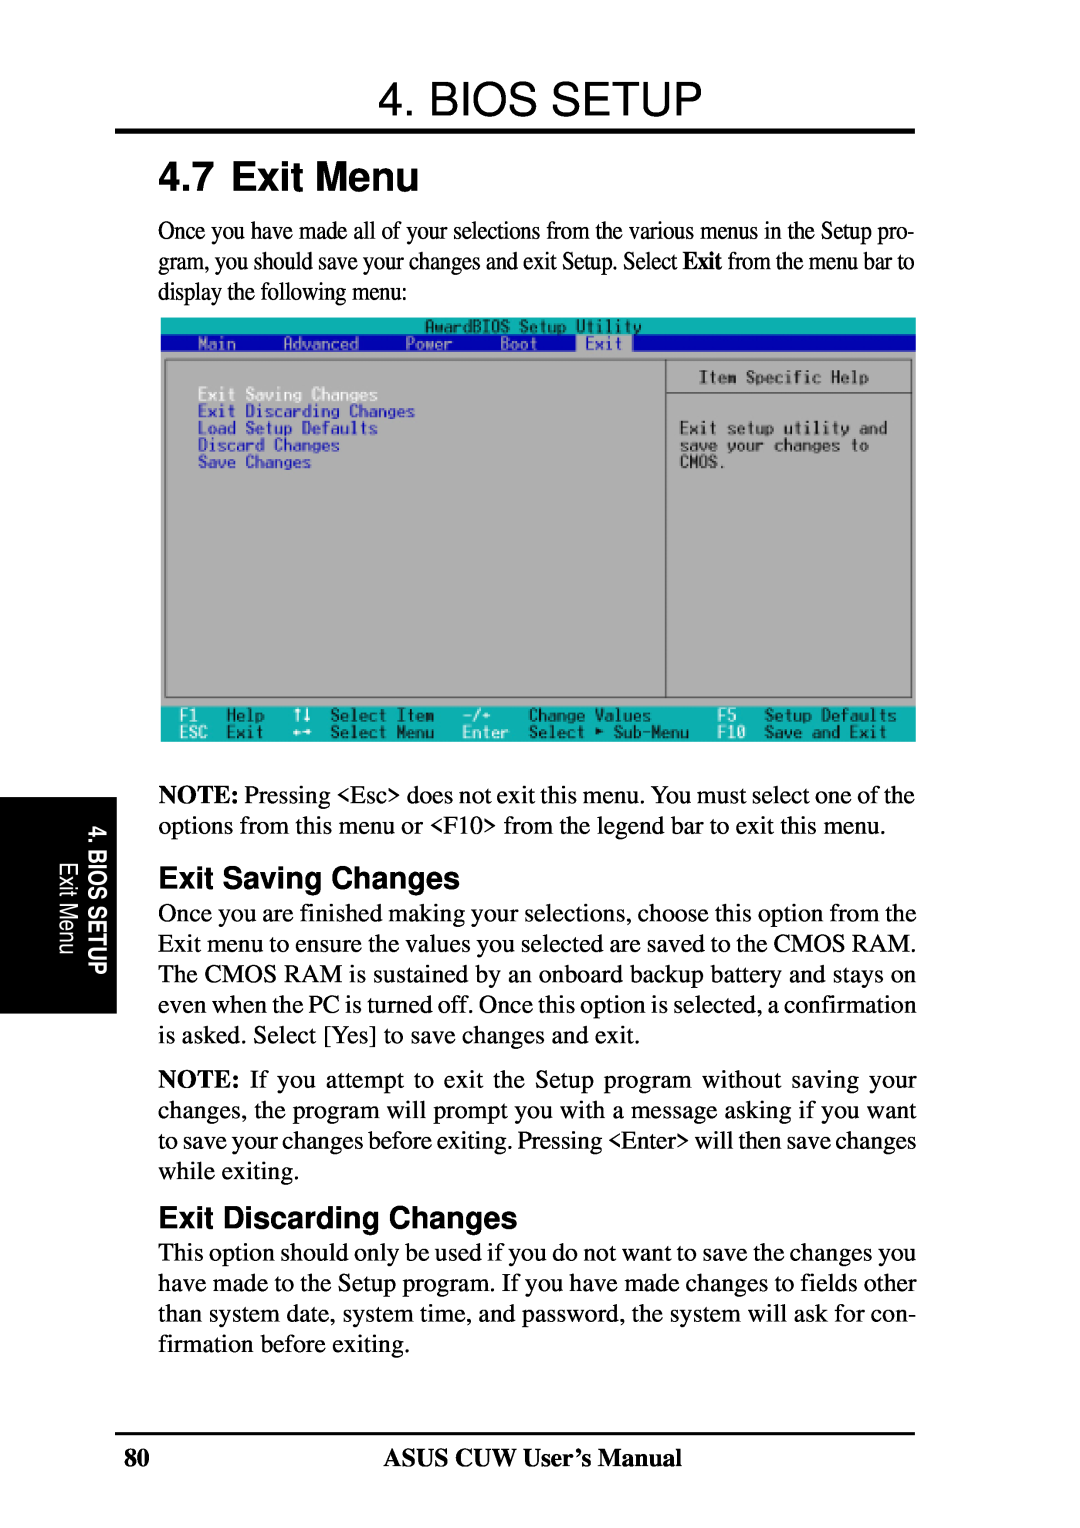 Asus 810 user manual Exit Menu, Exit Saving Changes, Exit Discarding Changes, Bios Setup 